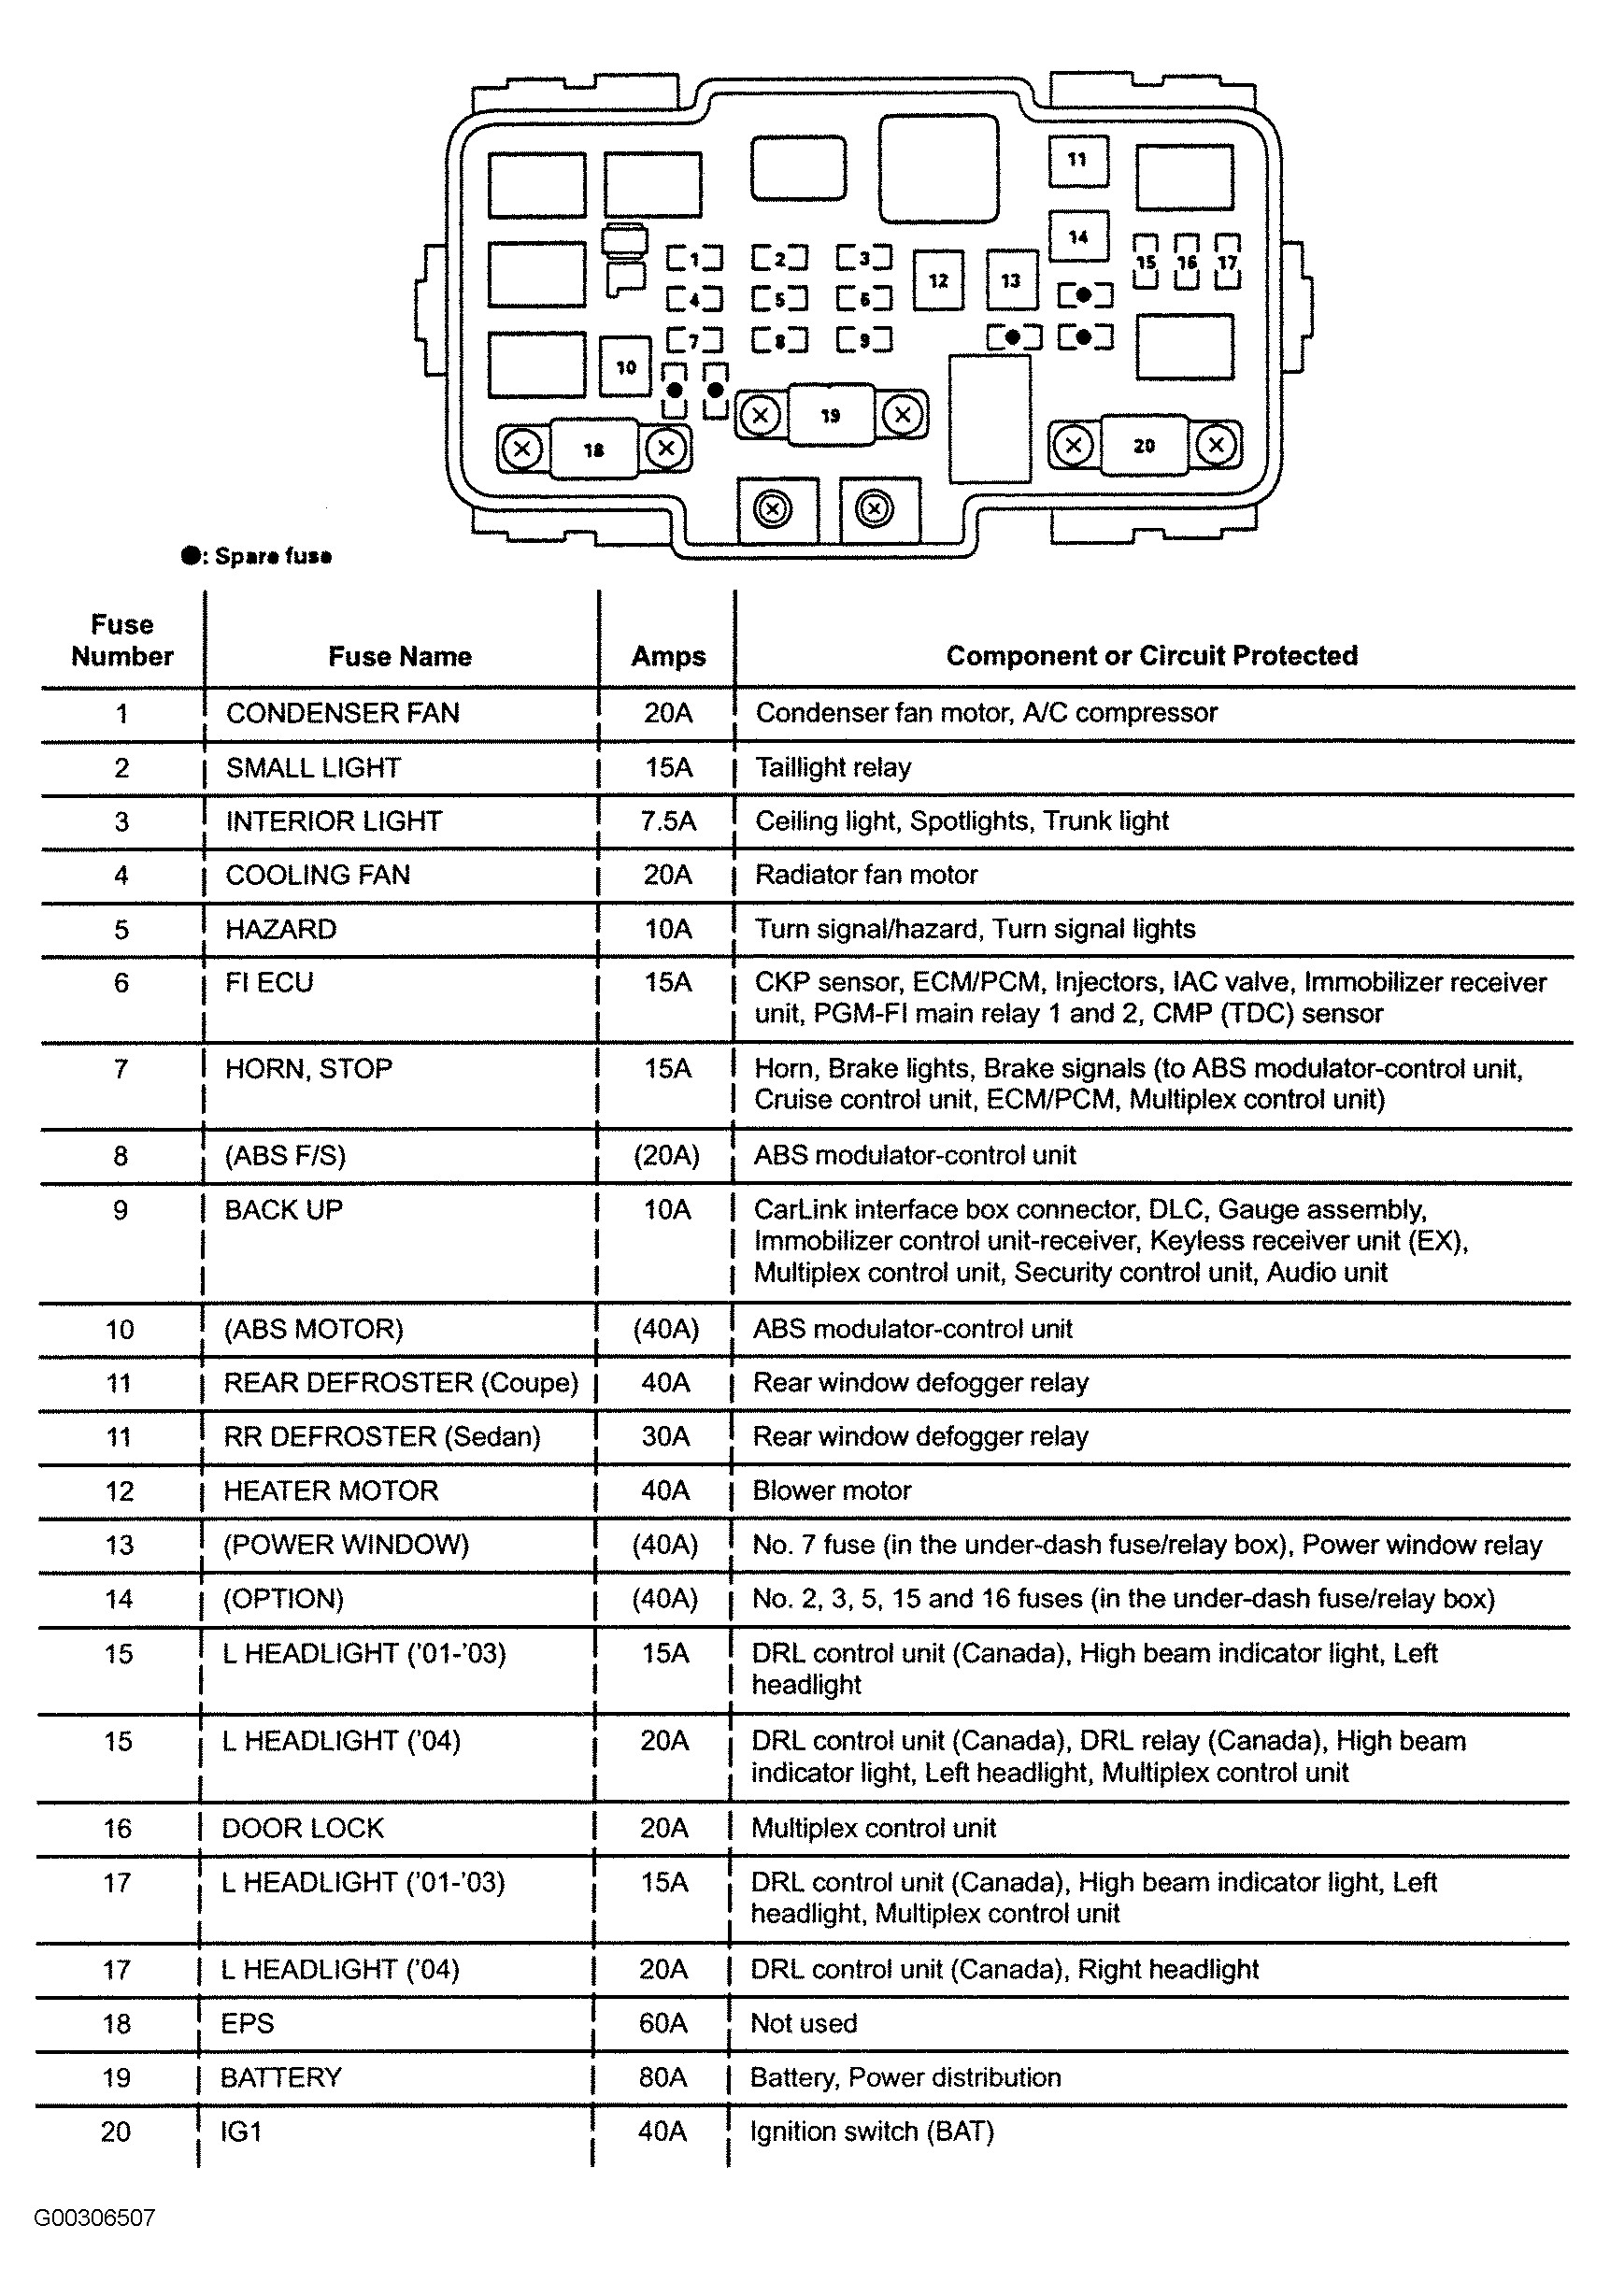 1993 Honda Prelude Engine Diagram 1993 Honda Prelude Fuse Box Diagram Wiring Diagram for You Of 1993 Honda Prelude Engine Diagram